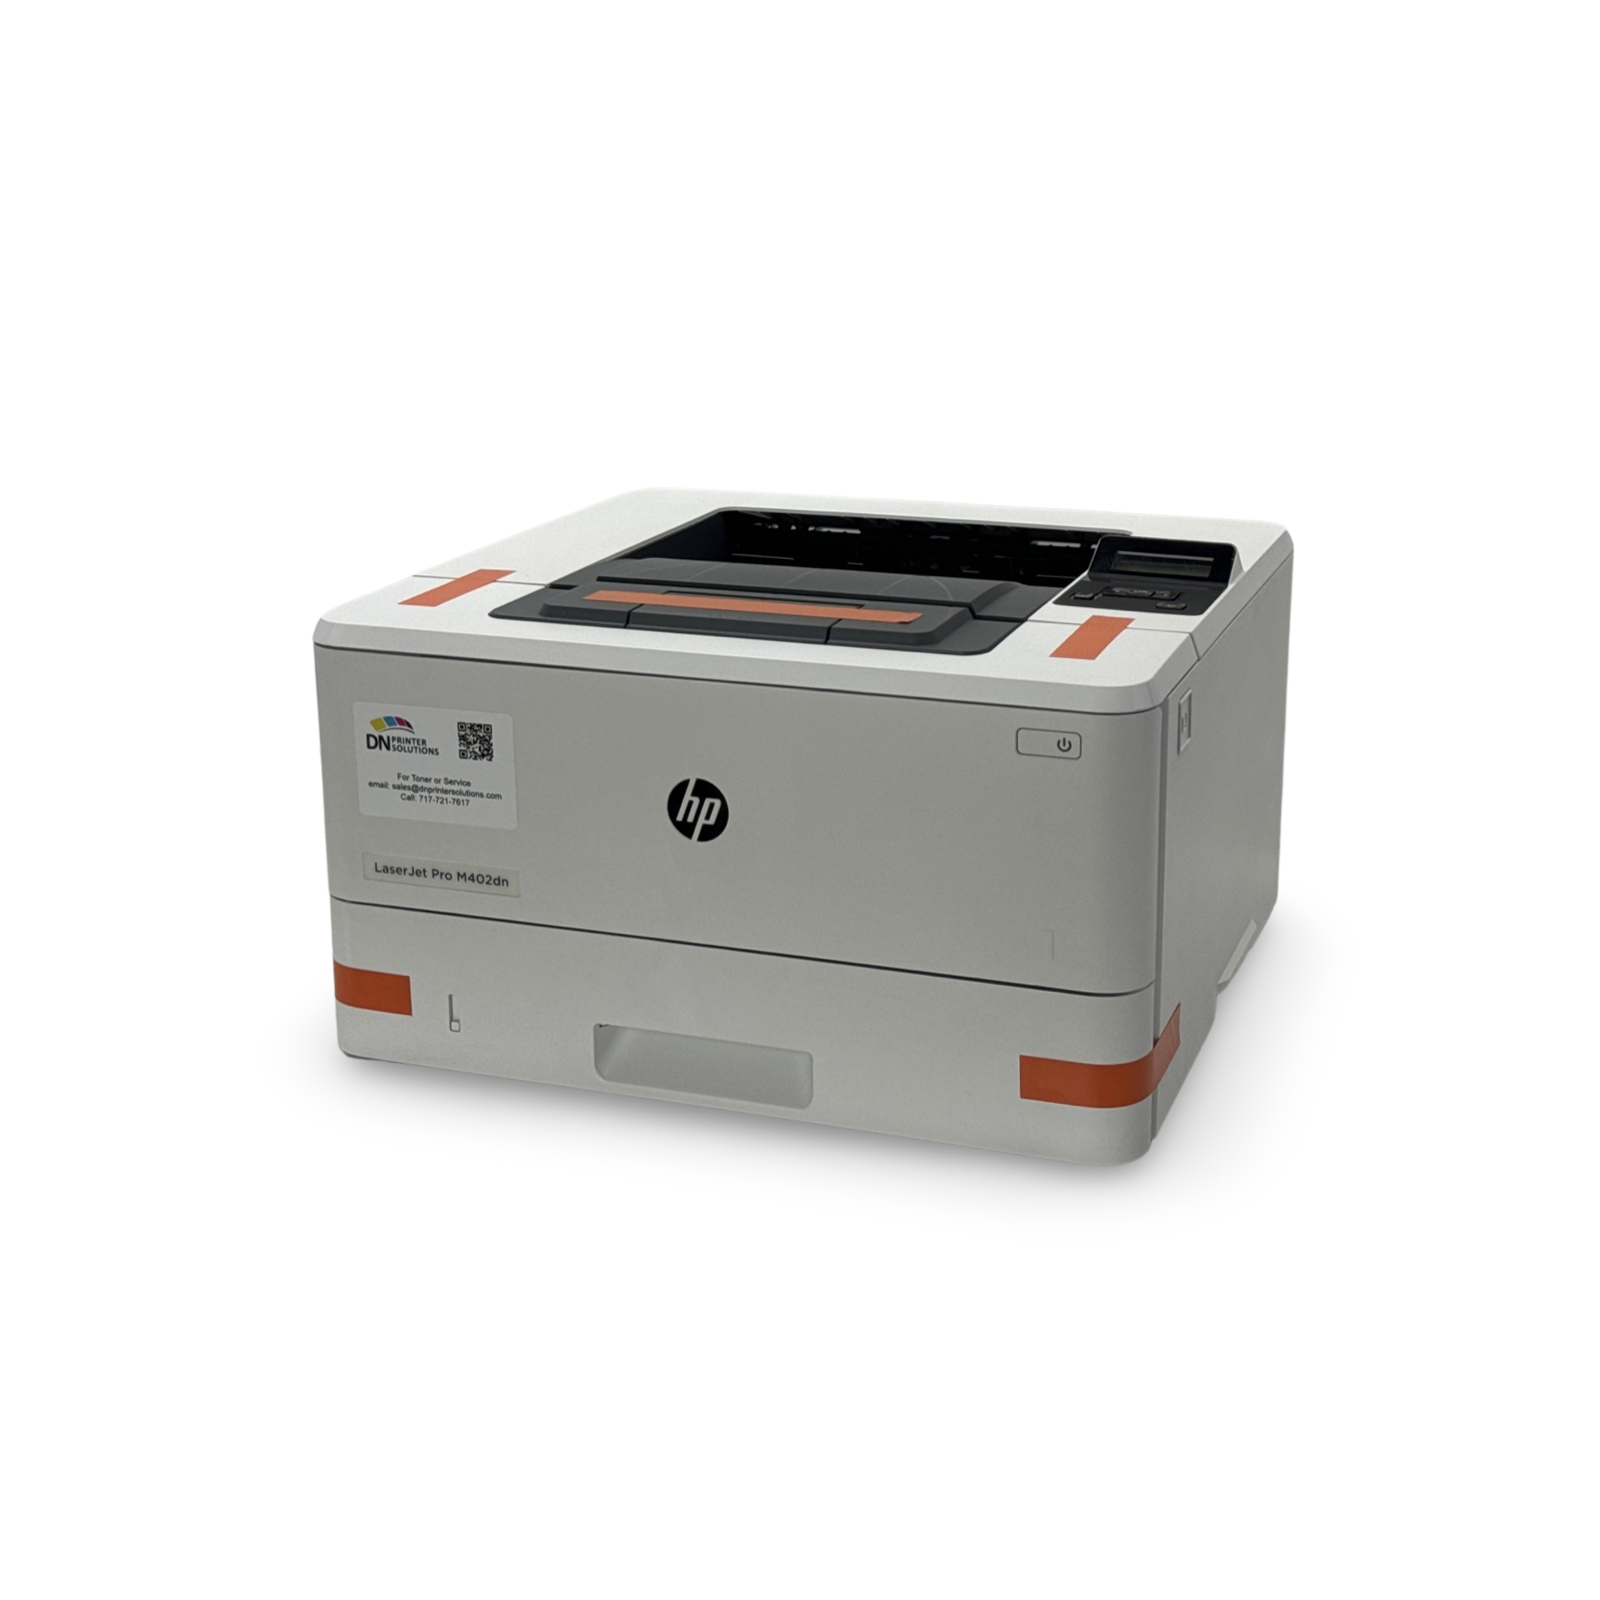 HP LaserJet Pro M402dn Laser Printer C5F94A Brand New